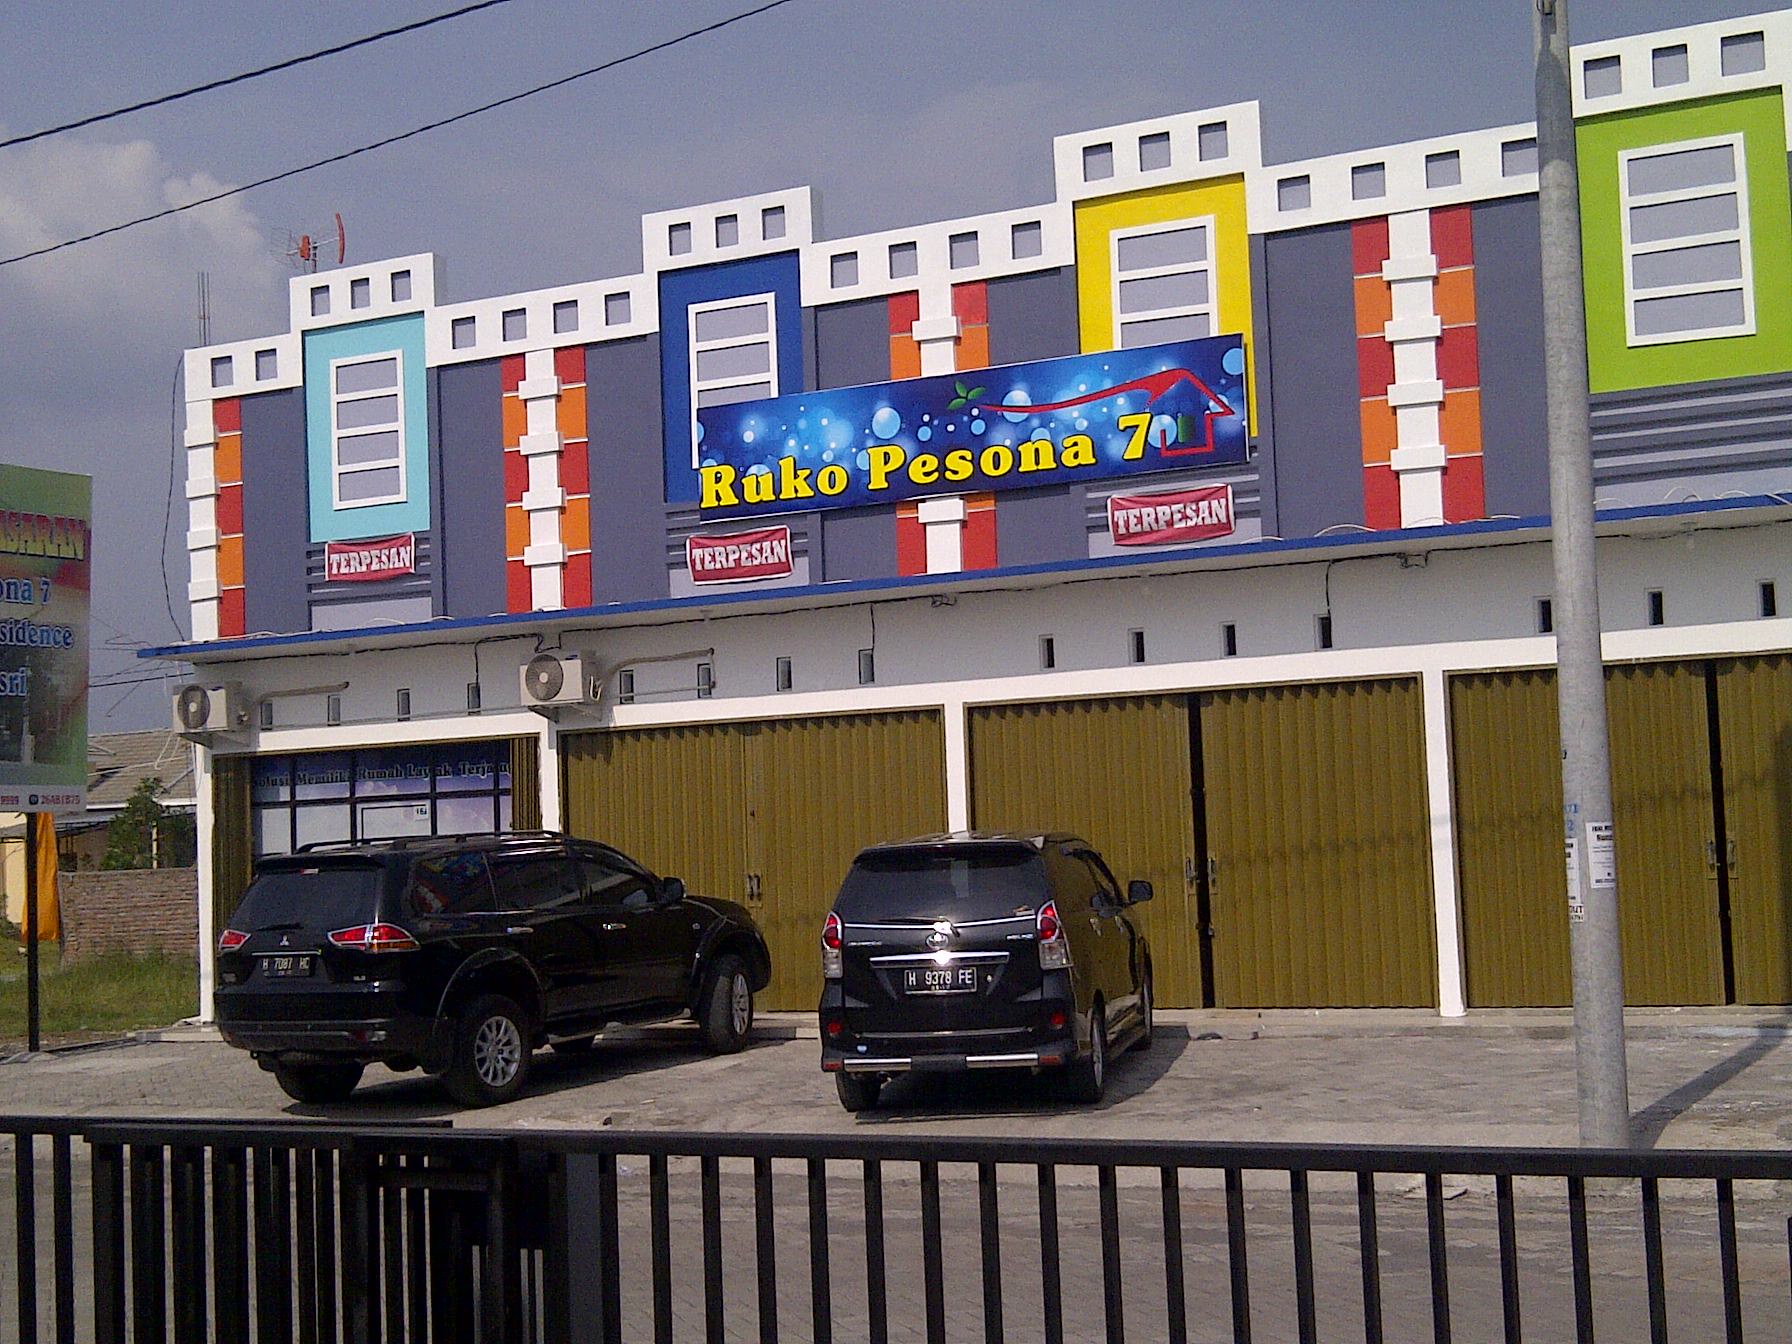 Dijual Rumah Murah di Semarang, Harga Rumah KPR 2014 di 